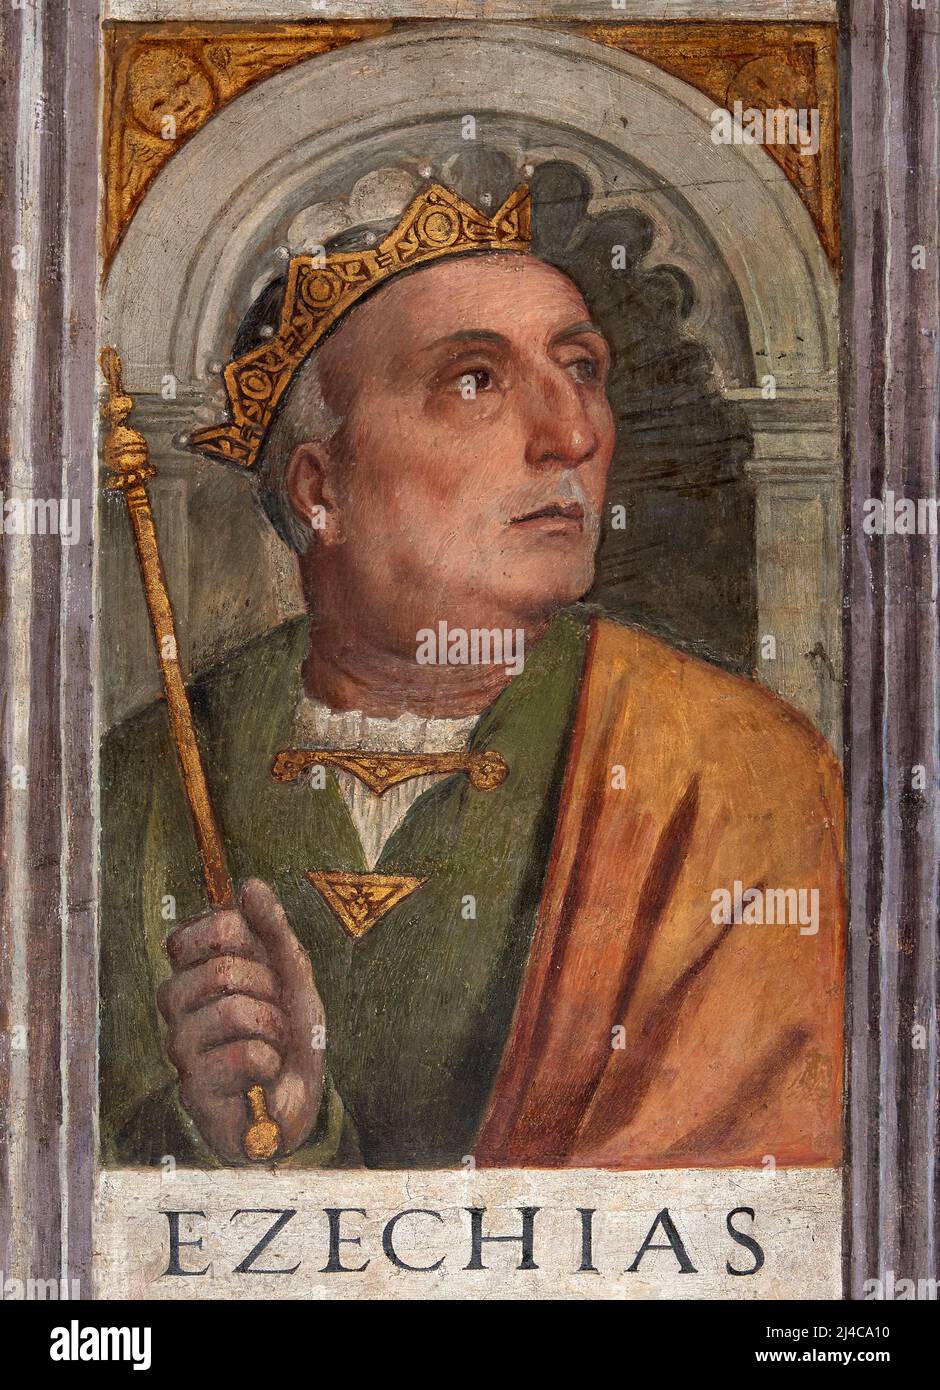 Ezechia, re di Israele - affresco - Girolamo Tessari - 1526 - Padova, chiesa di S. Francesco Grande Stock Photo